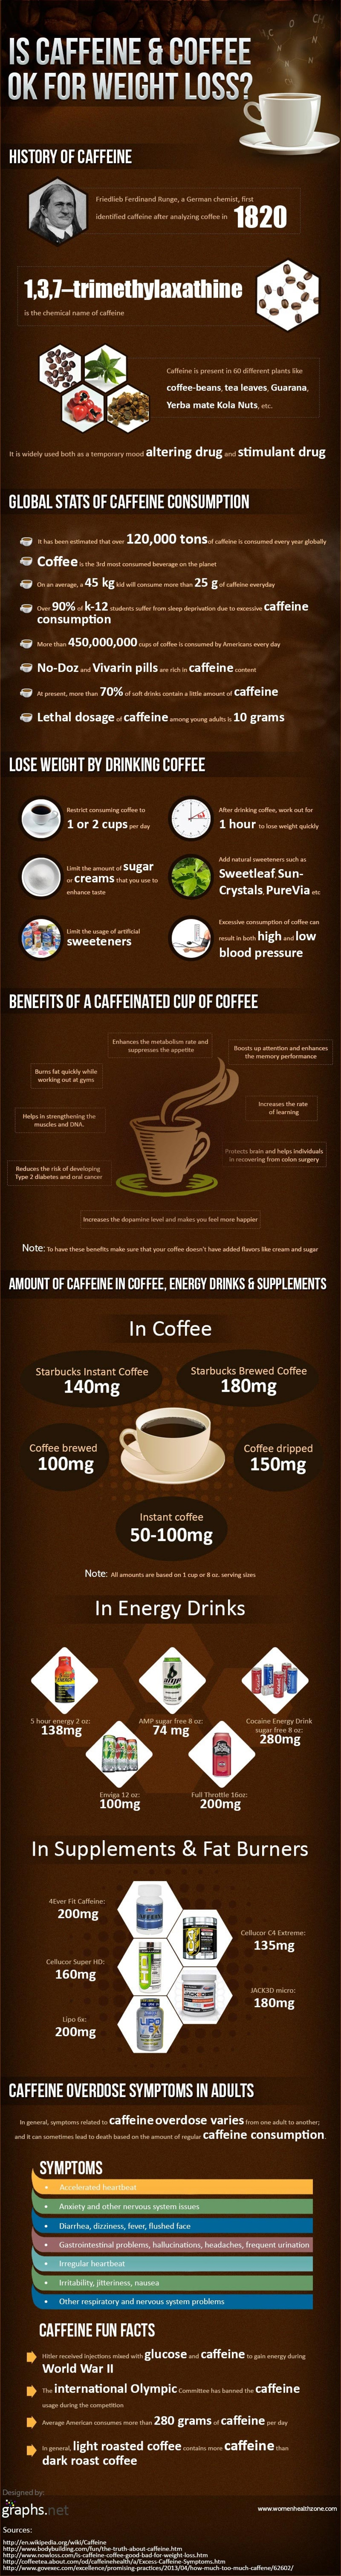 what-are-caffeine-overdose-symptoms-in-adults_51f1196fcb225_w1500